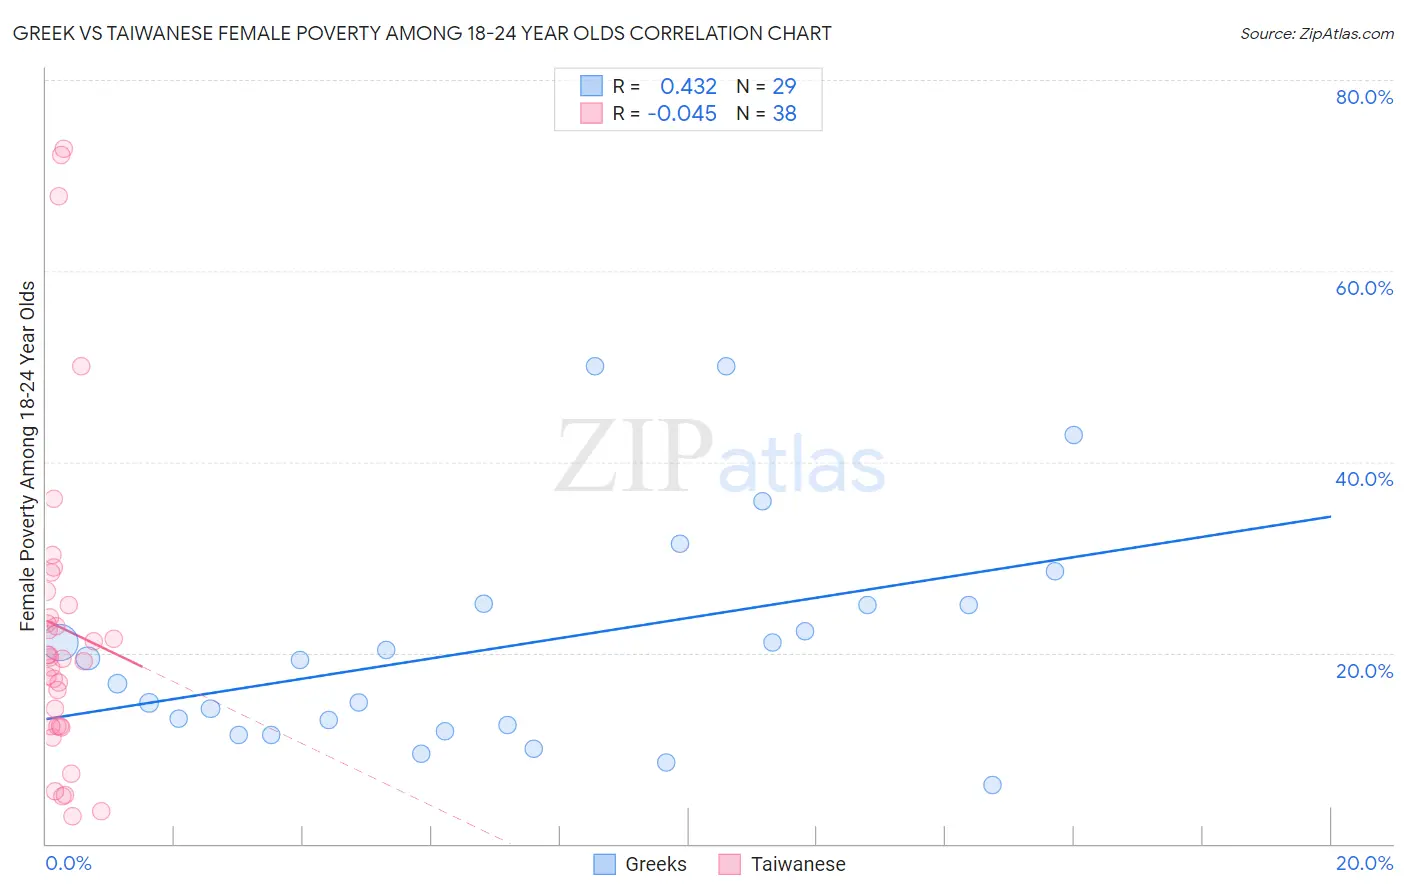 Greek vs Taiwanese Female Poverty Among 18-24 Year Olds